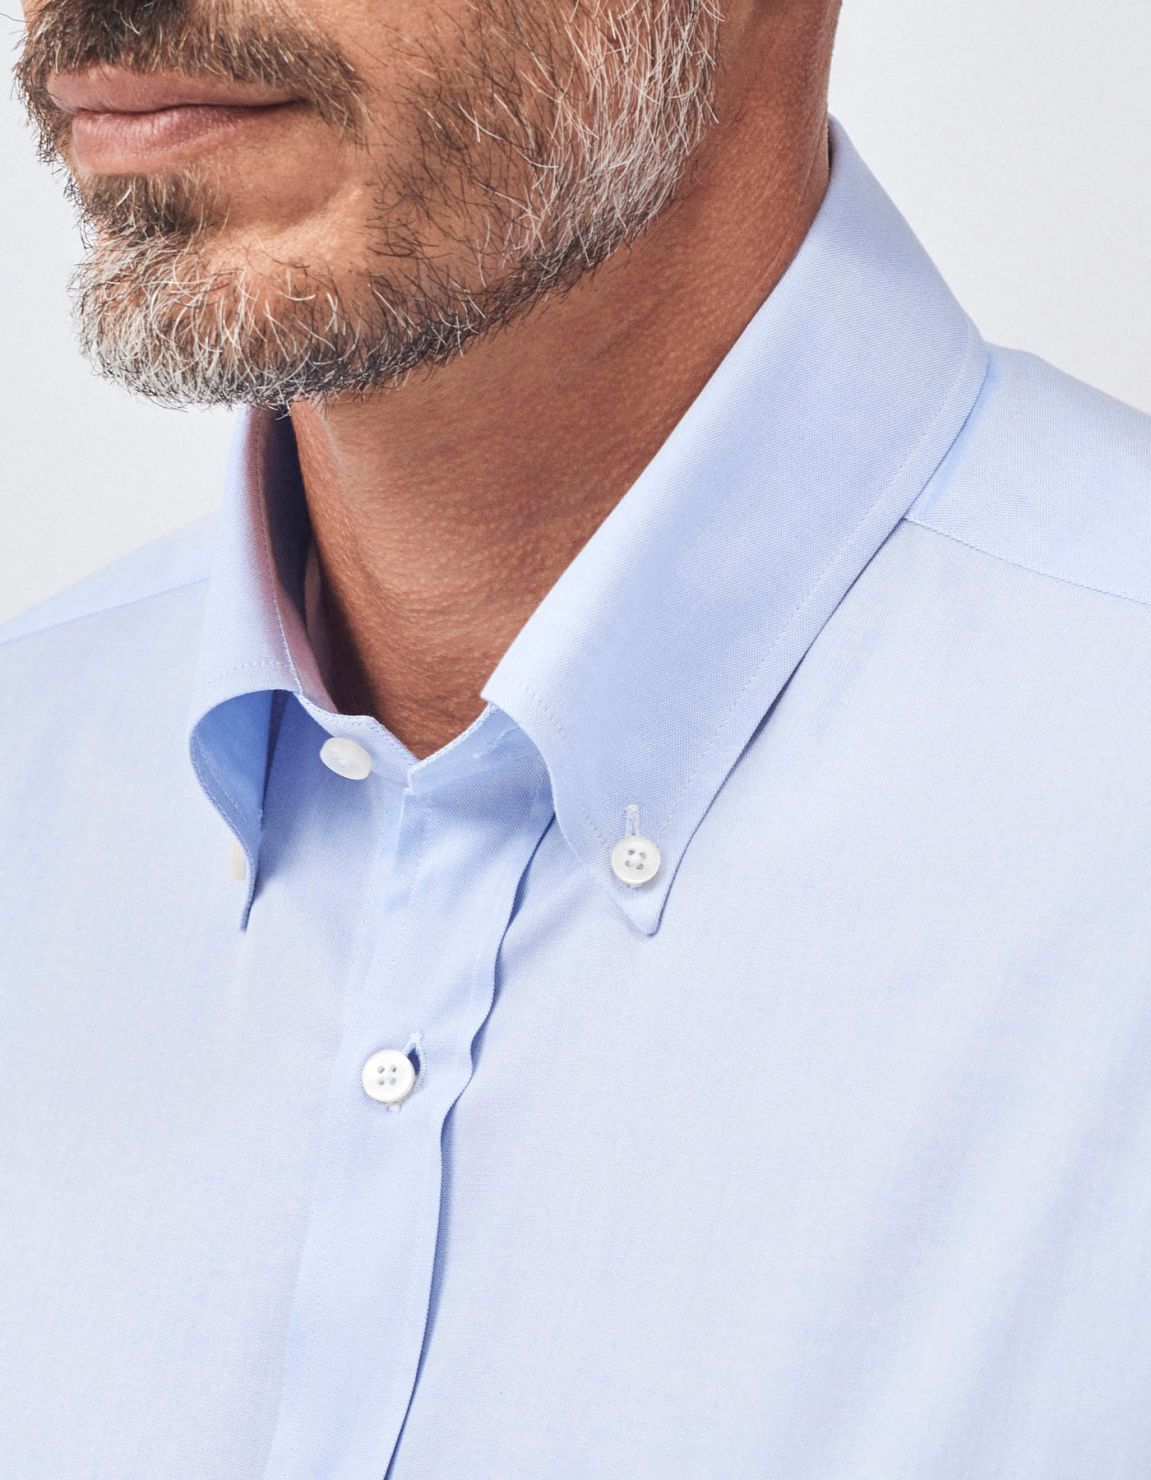 Shirt Collar button down Light Blue Pin point Evolution Classic Fit 3